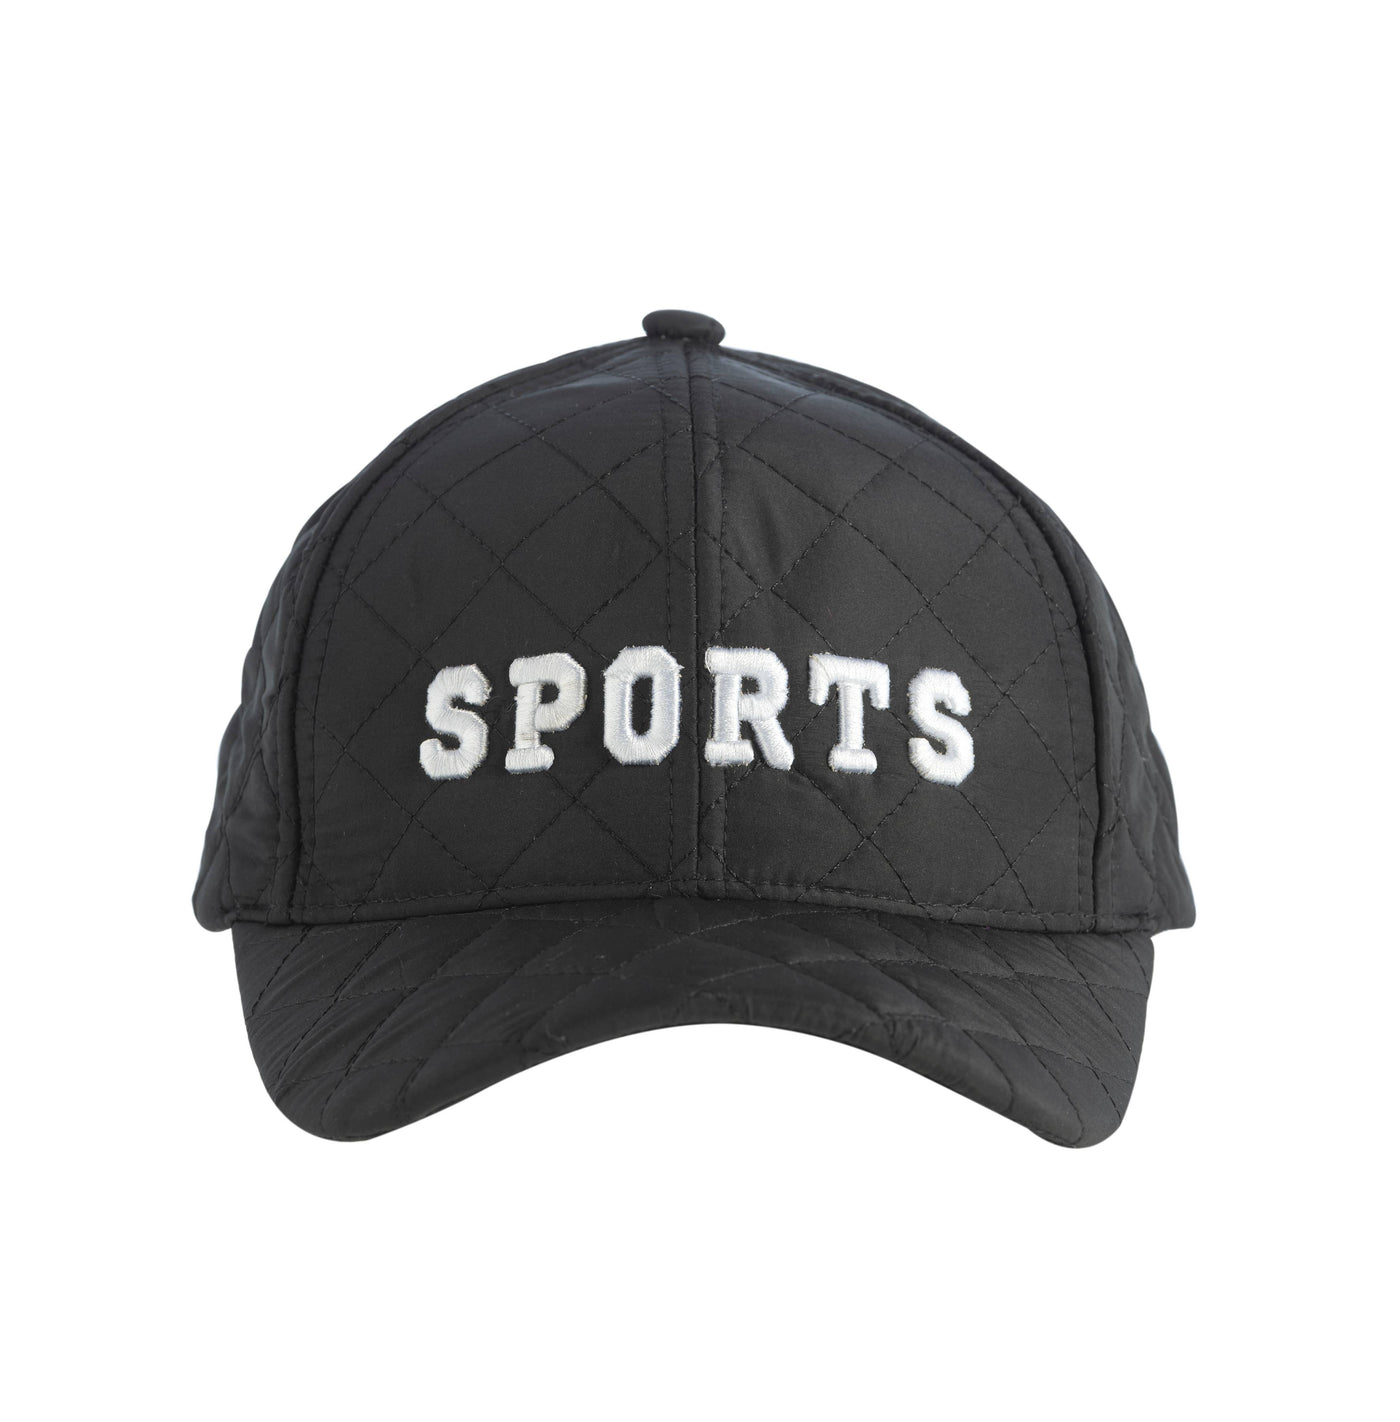 "SPORTS" BALL CAP, BLACK